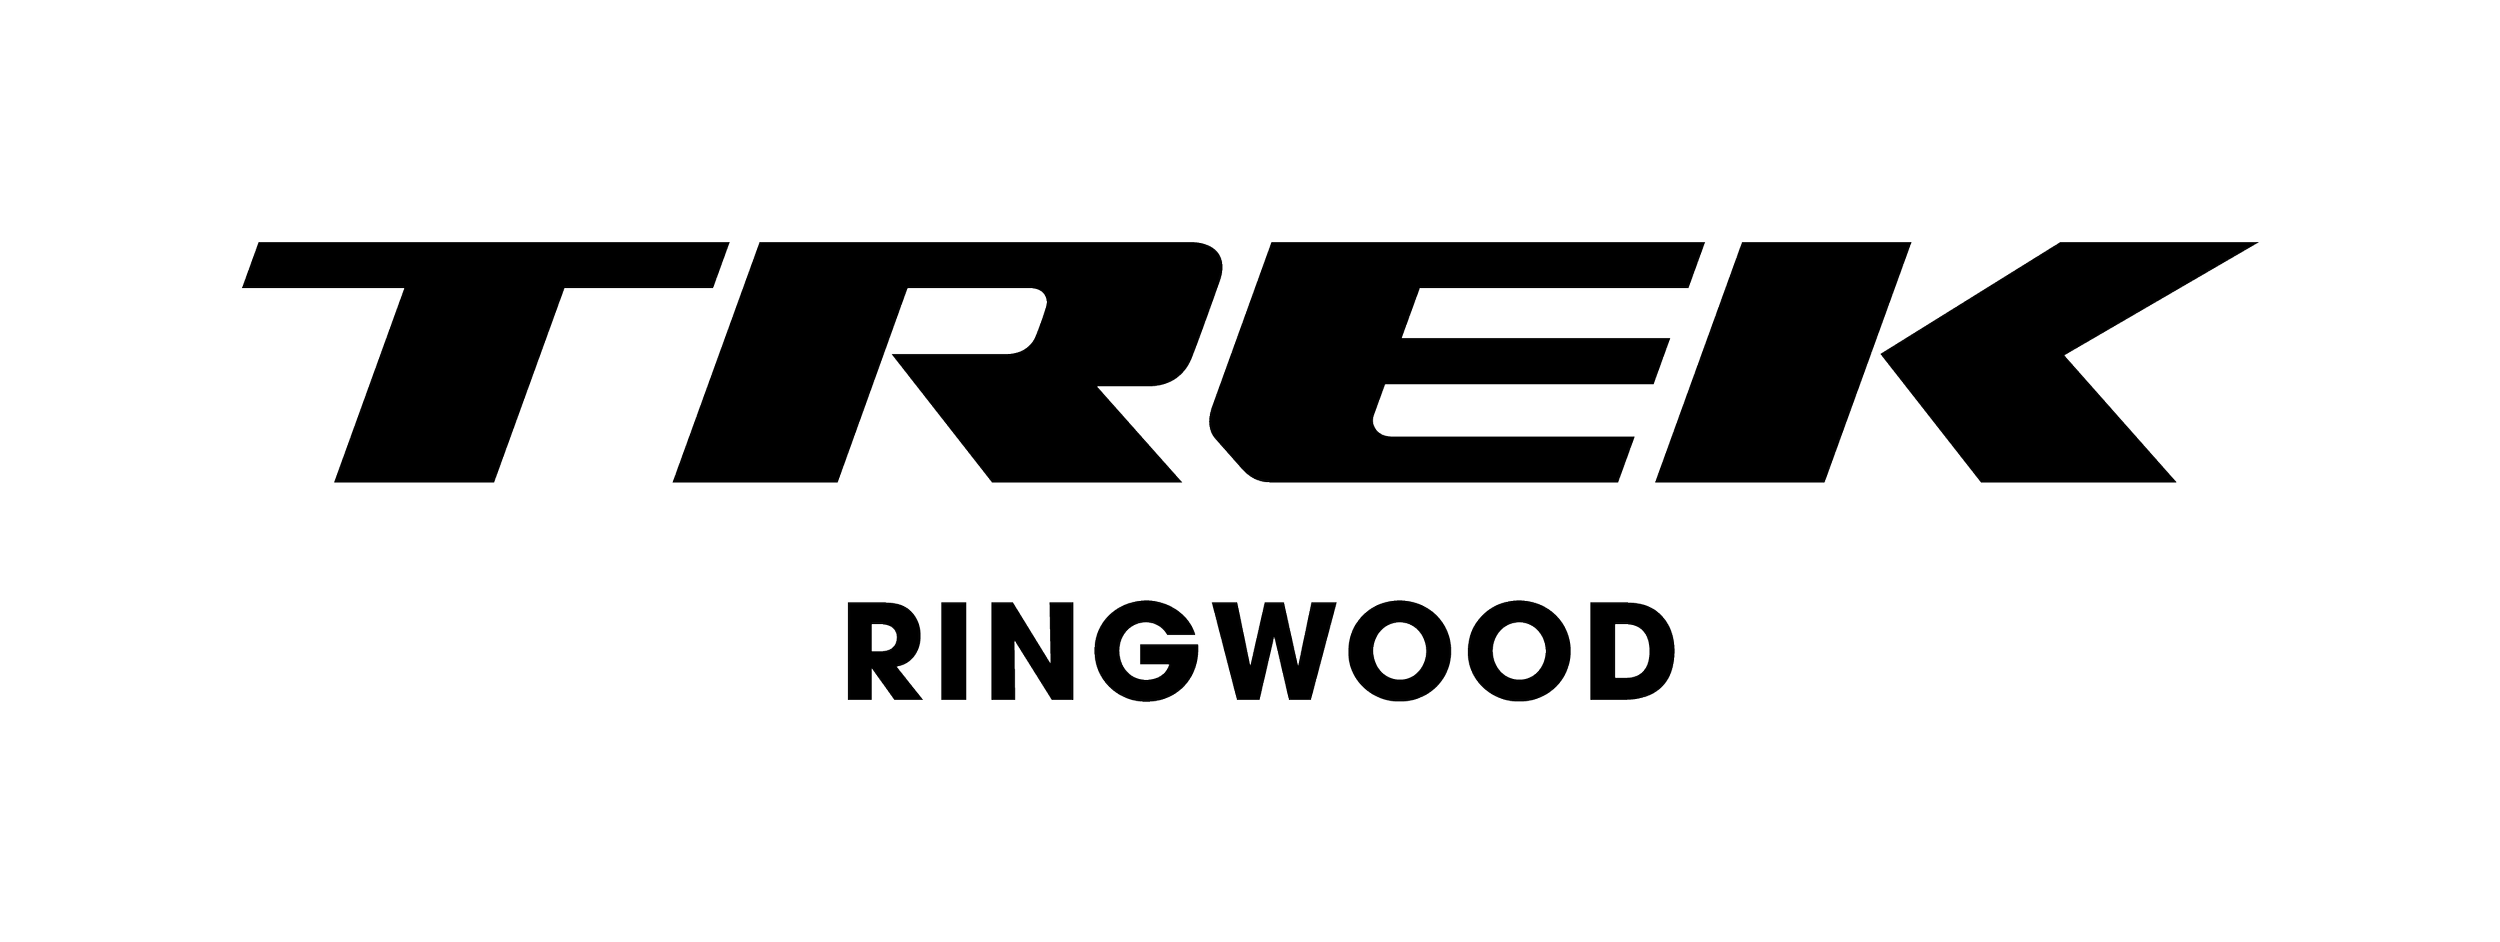 2018_Trek_logo_location_Ringwood_black.png